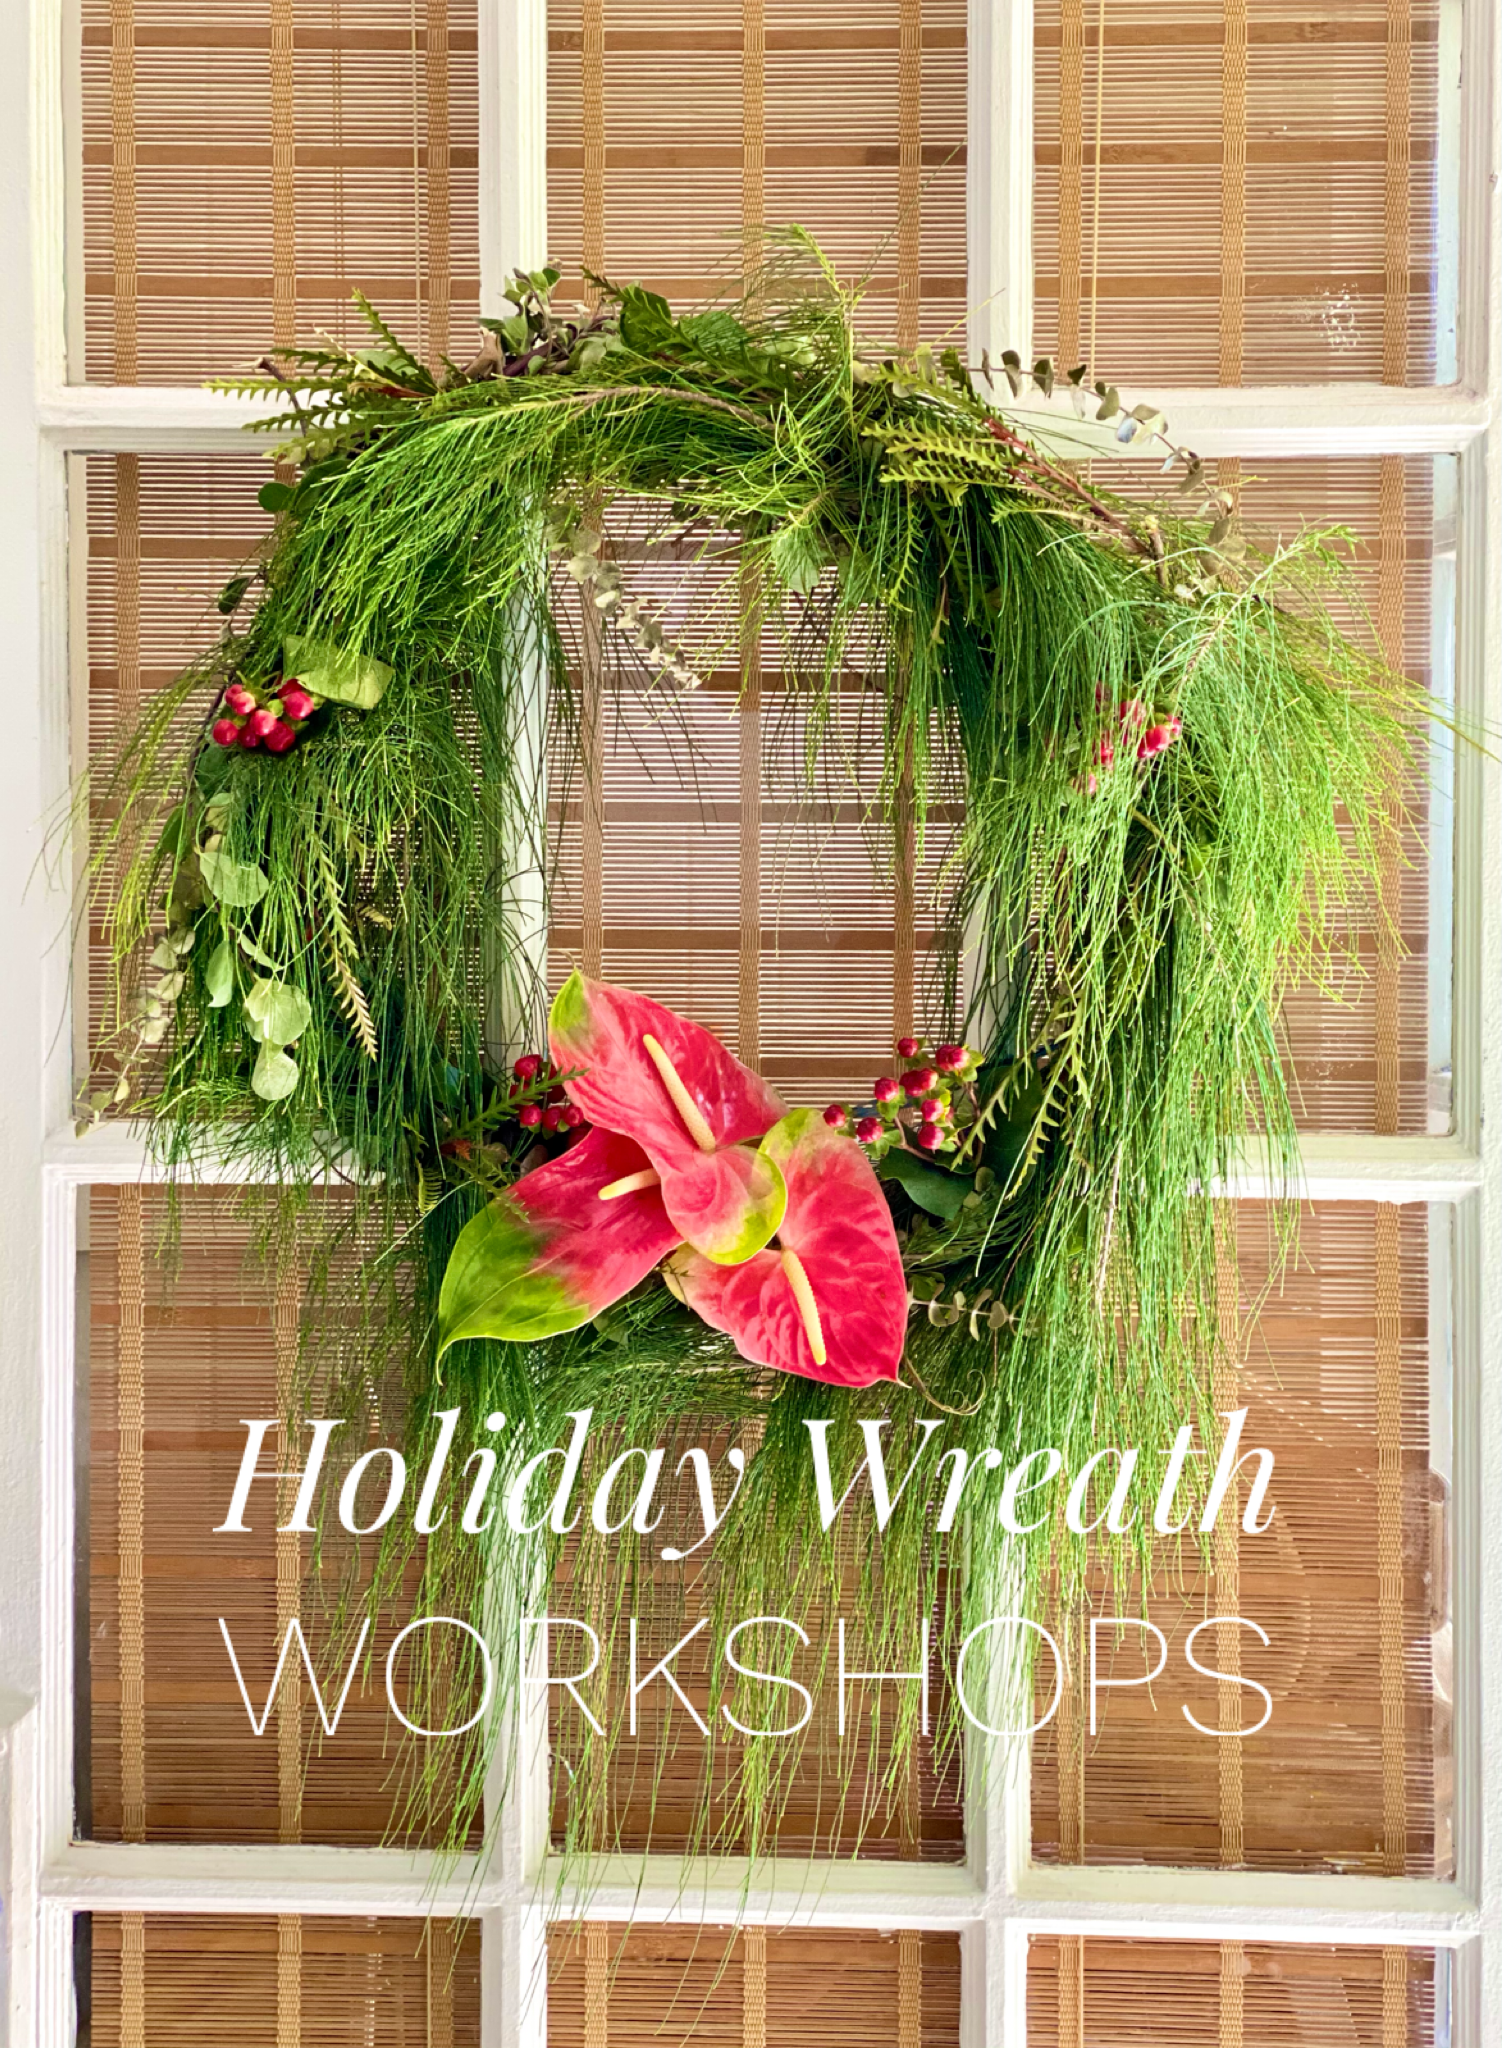 Wreath Making Workshop - Cabell-Huntington CVB : Cabell-Huntington CVB